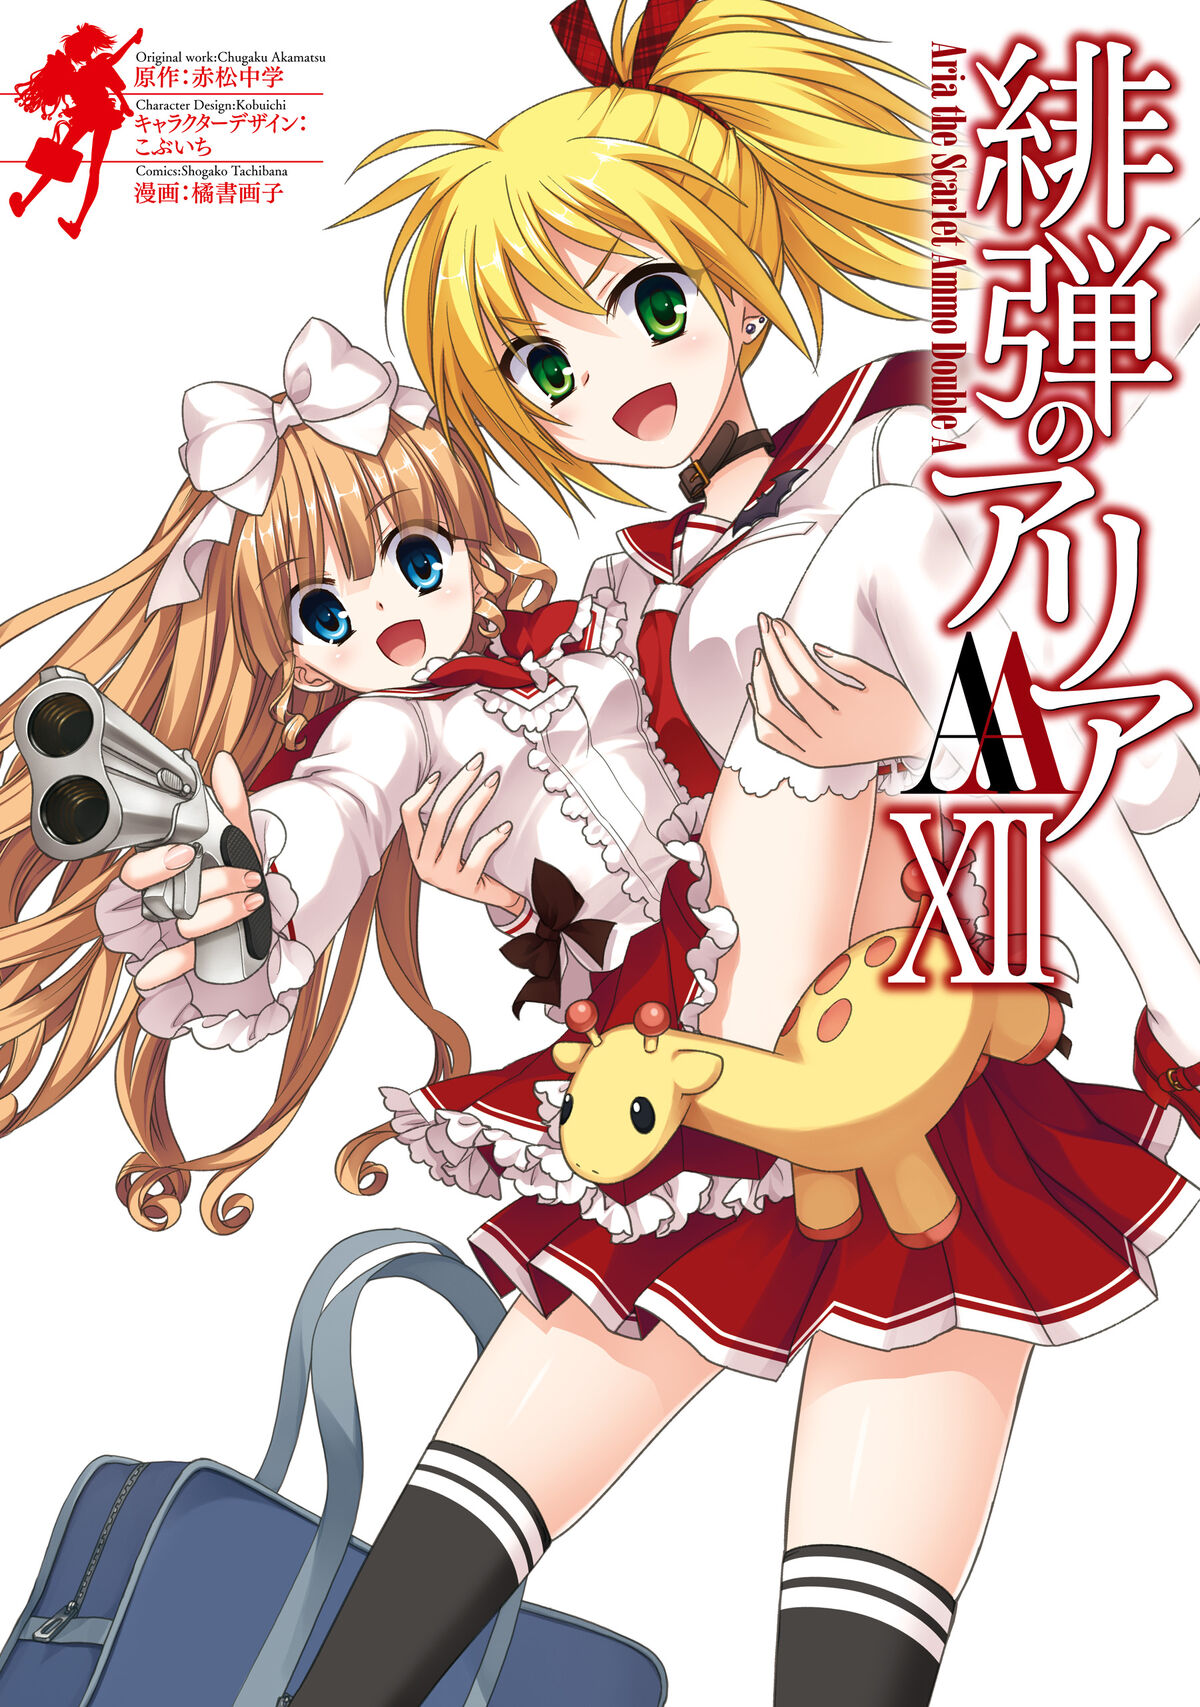 Digital Manga Adds Kotoura-san, Aria the Scarlet Ammo on eManga